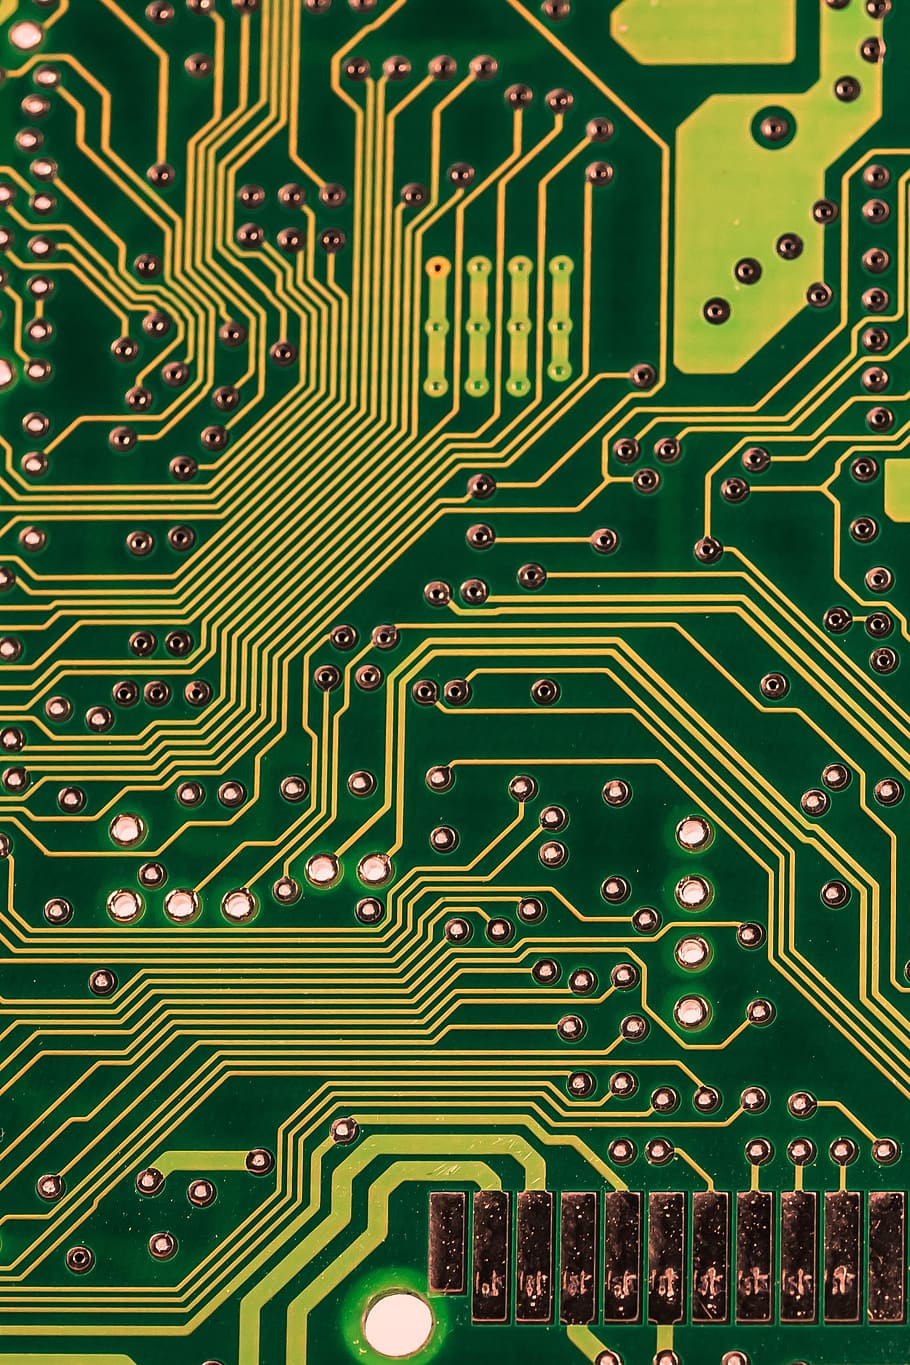 HD wallpaper: green and black circuit board, computer, chip, data